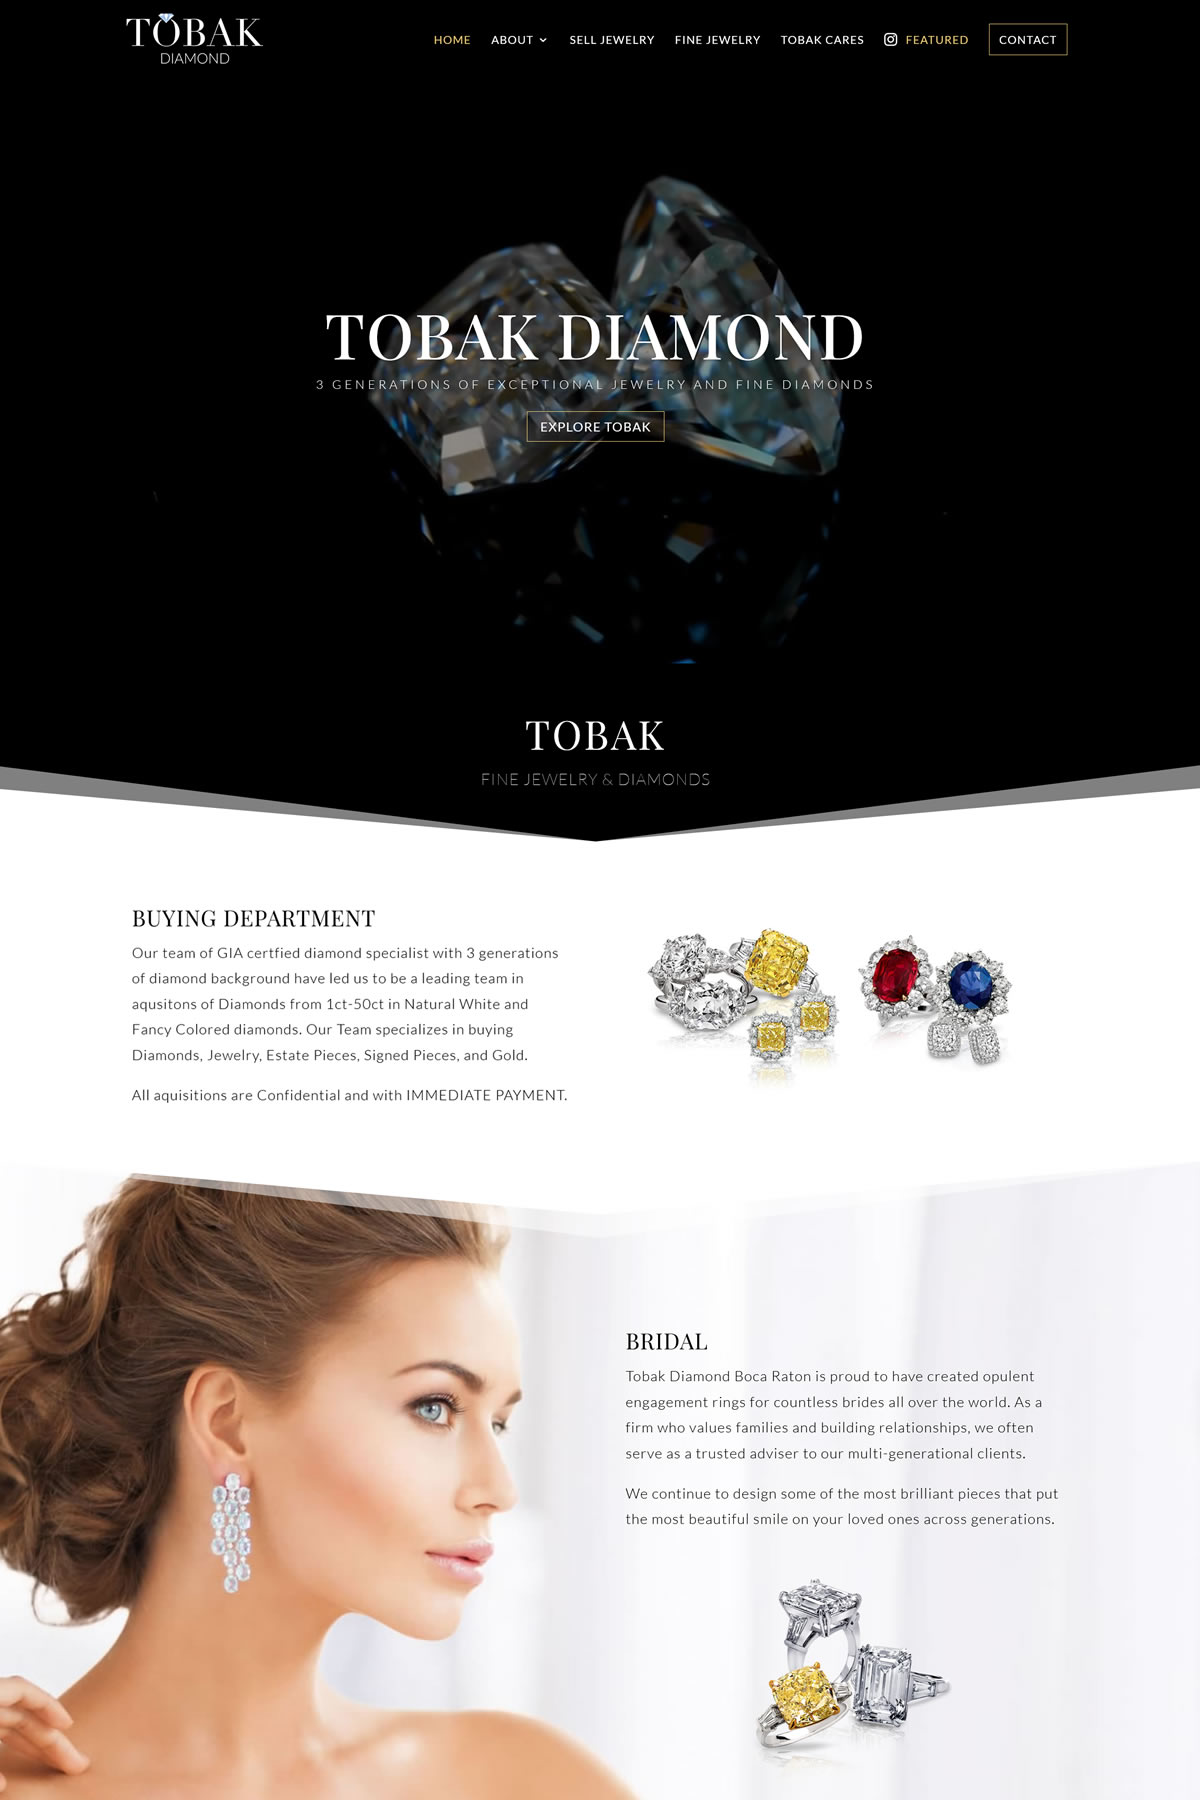 tobak-diamond-boca-raton-gohooper-best-web-design-company